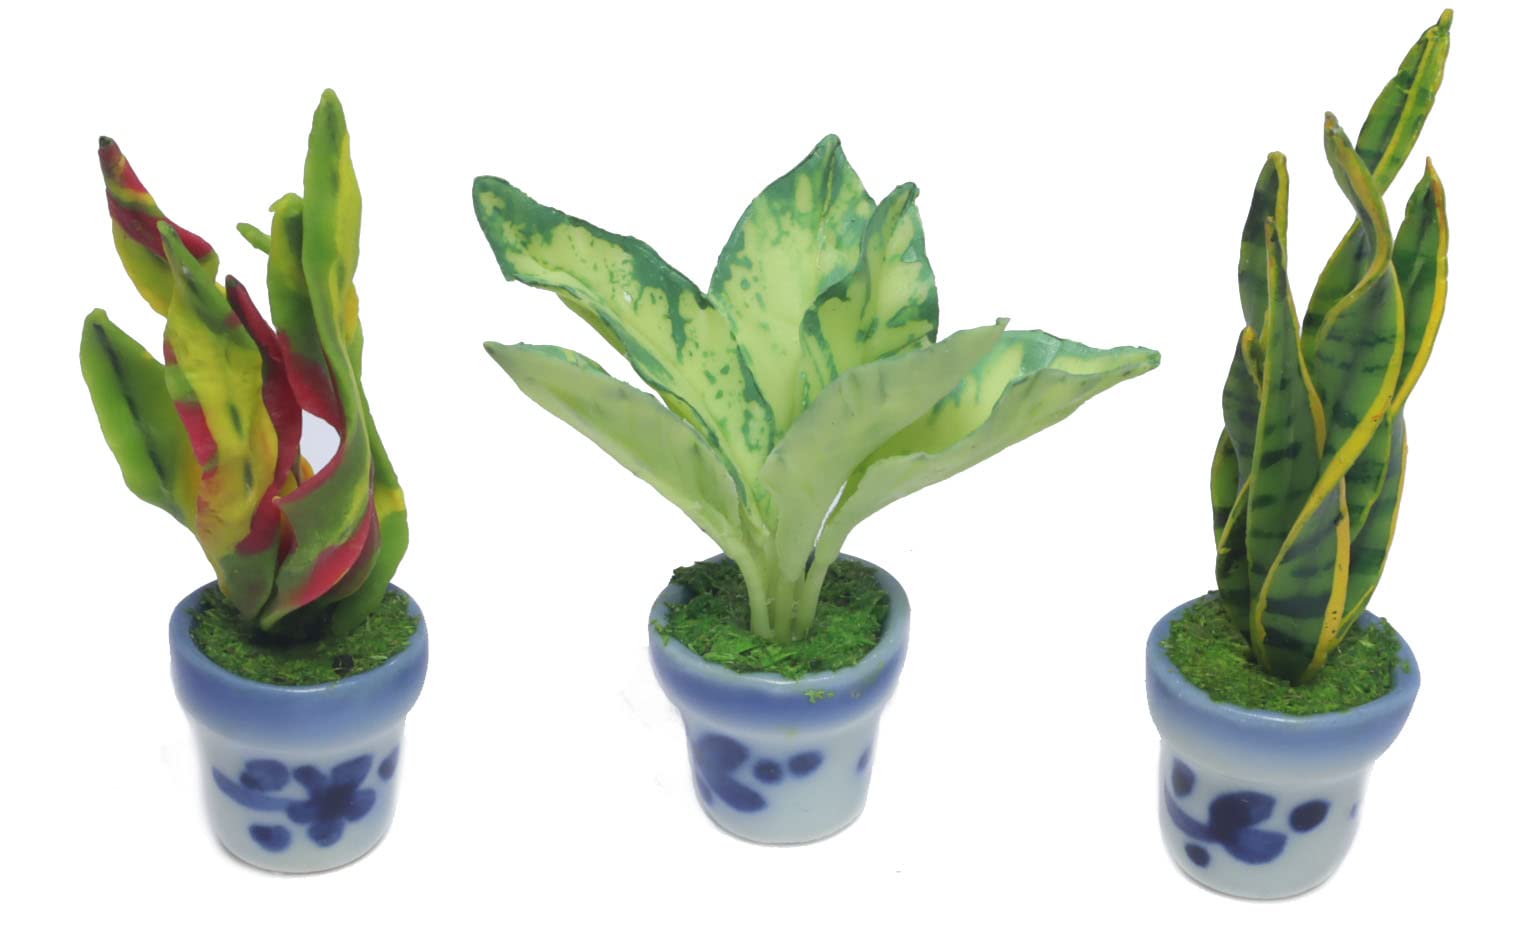 3 Pieces 1:12 Dollhouse Miniature Artificial Flower Plants in Ceramic Pot, Codiaeum Variegatum,Aglaonema,Sansevieria Dollhouse Accessories for Collectibles and Home Decoration